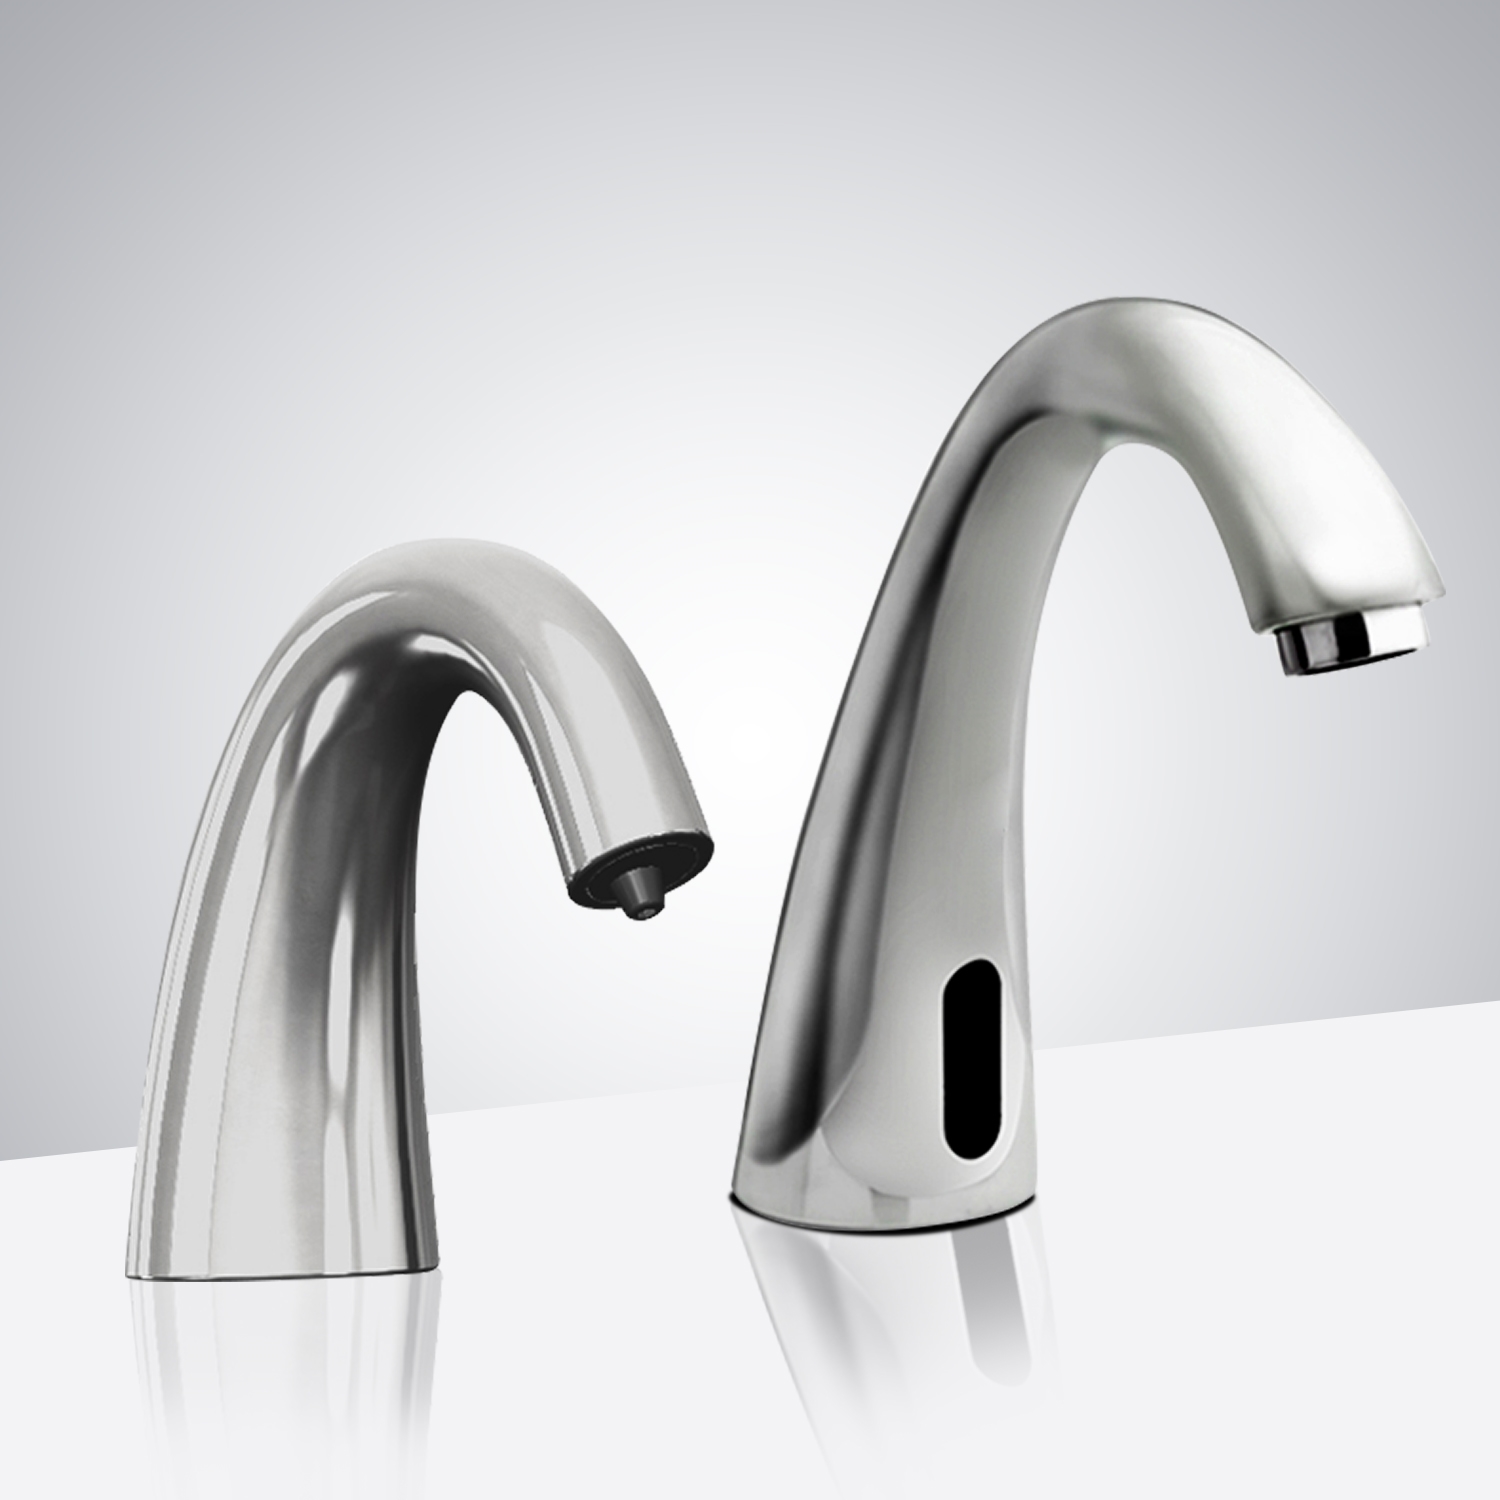 Fontana Le Havre Motion Sensor Faucet & Automatic Soap Dispenser for Restrooms in Polished Chrome